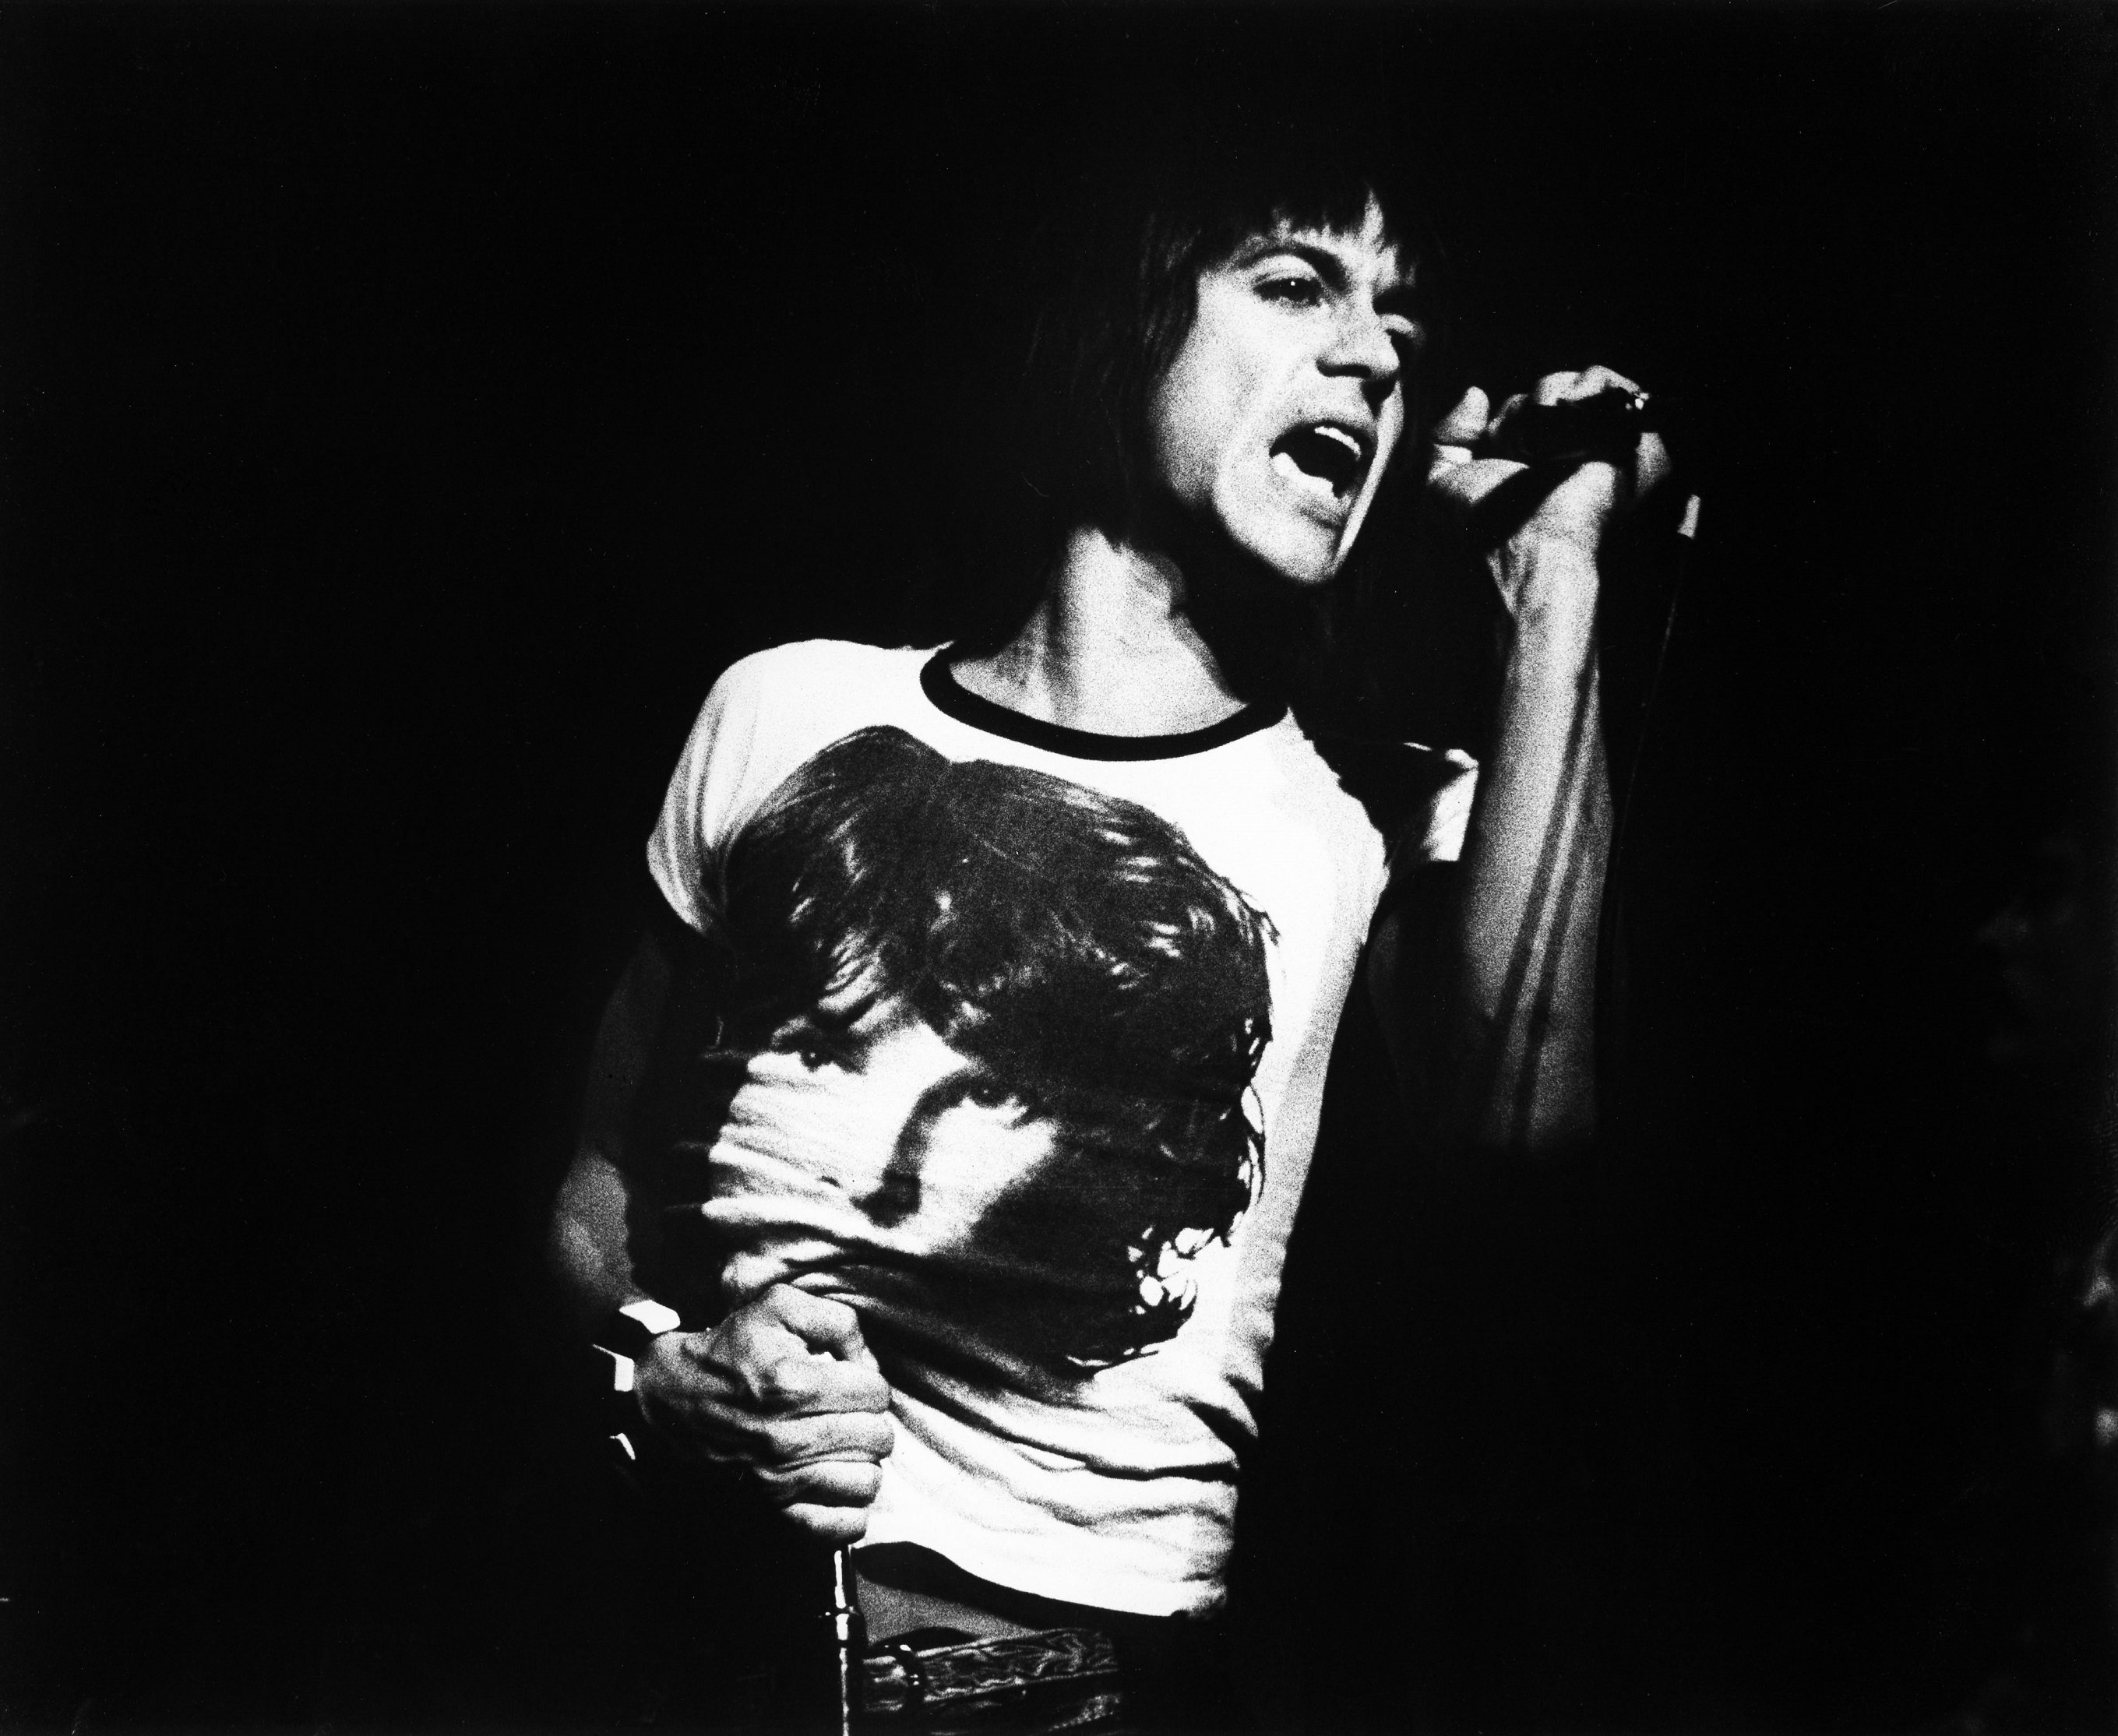 Iggy Pop wearing a shirt depicting The Doors' Jim Morrison